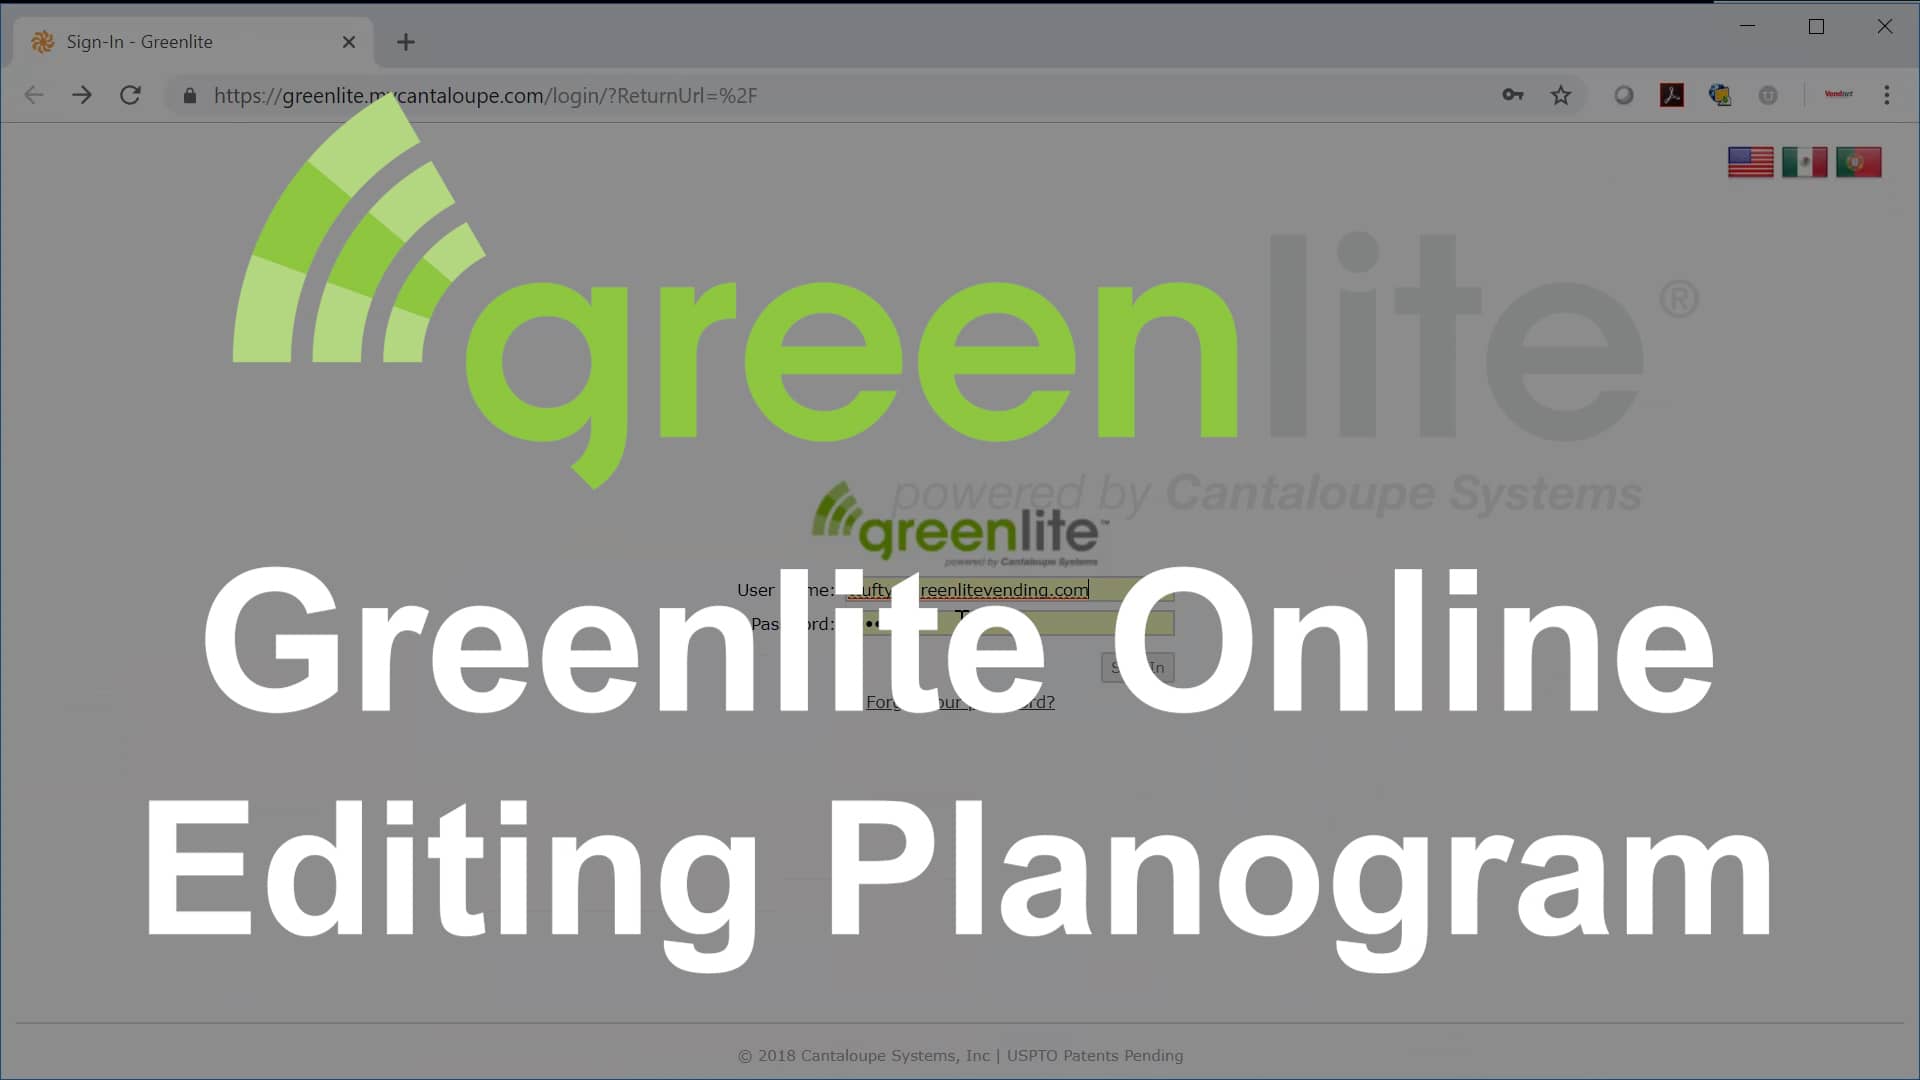 Greenlite: Editing Planogram